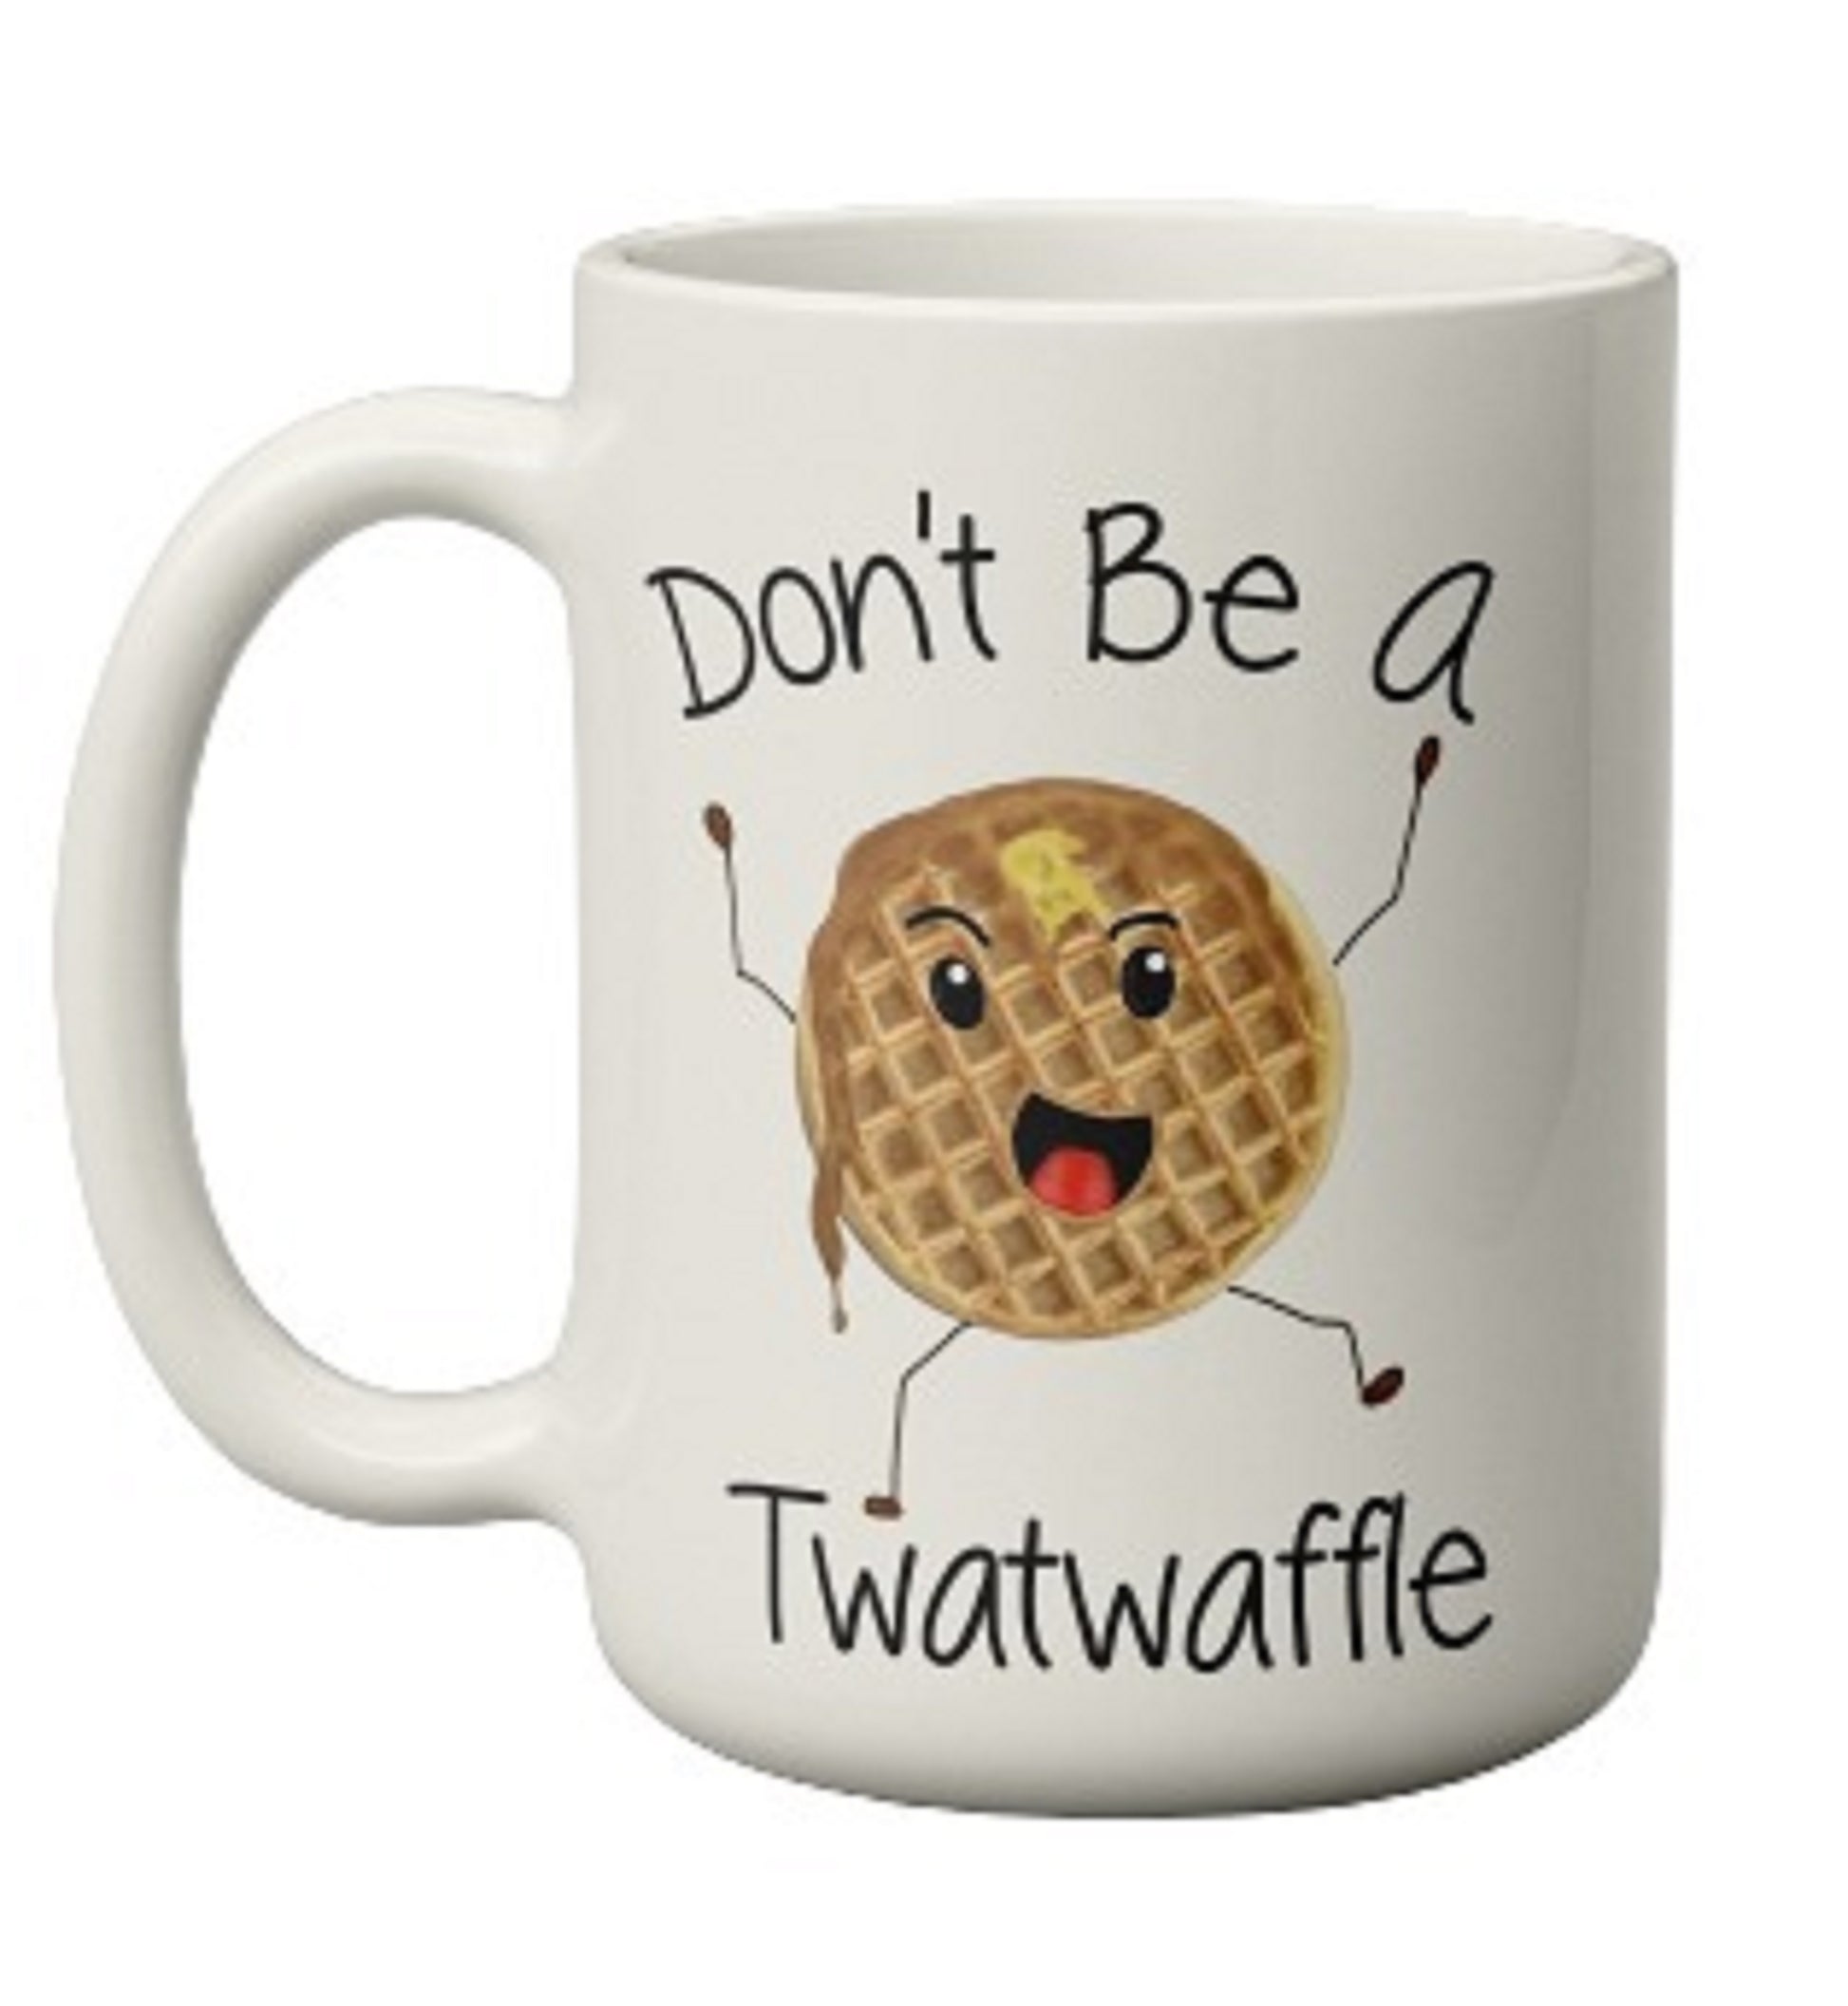  Funny Don't Be A Twattwaffle Mug by Free Spirit Accessories sold by Free Spirit Accessories